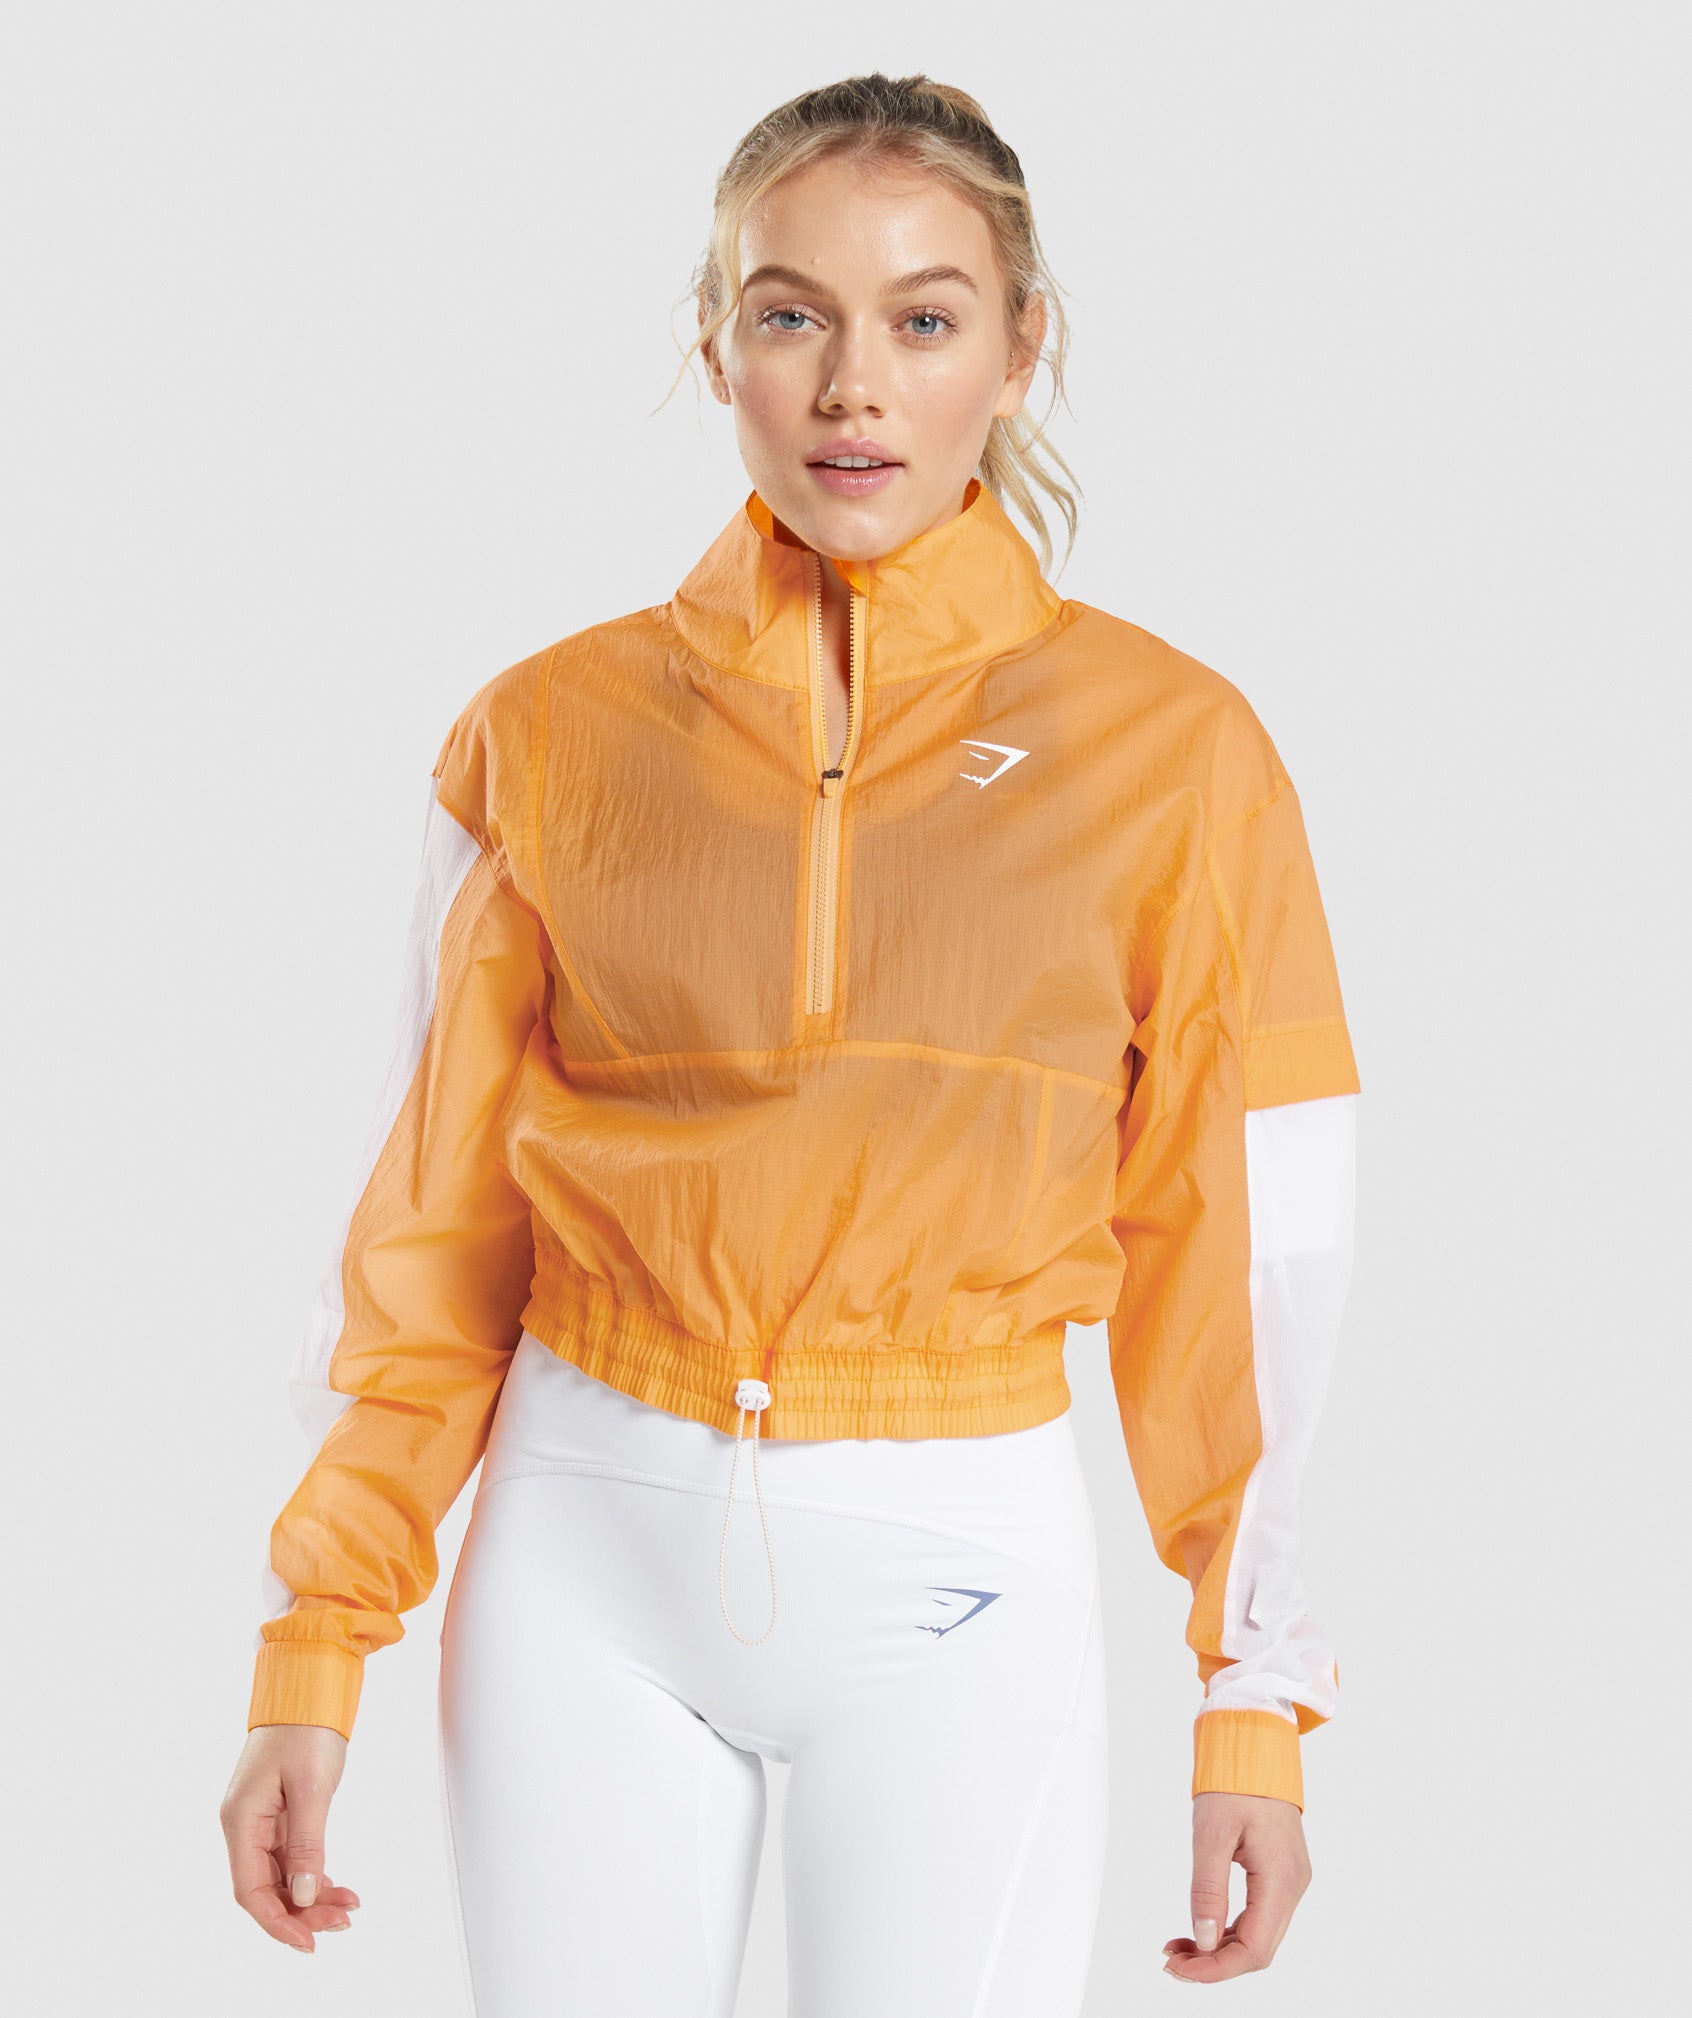 Gymshark Pulse Woven Jacket - Apricot Orange/White | Gymshark